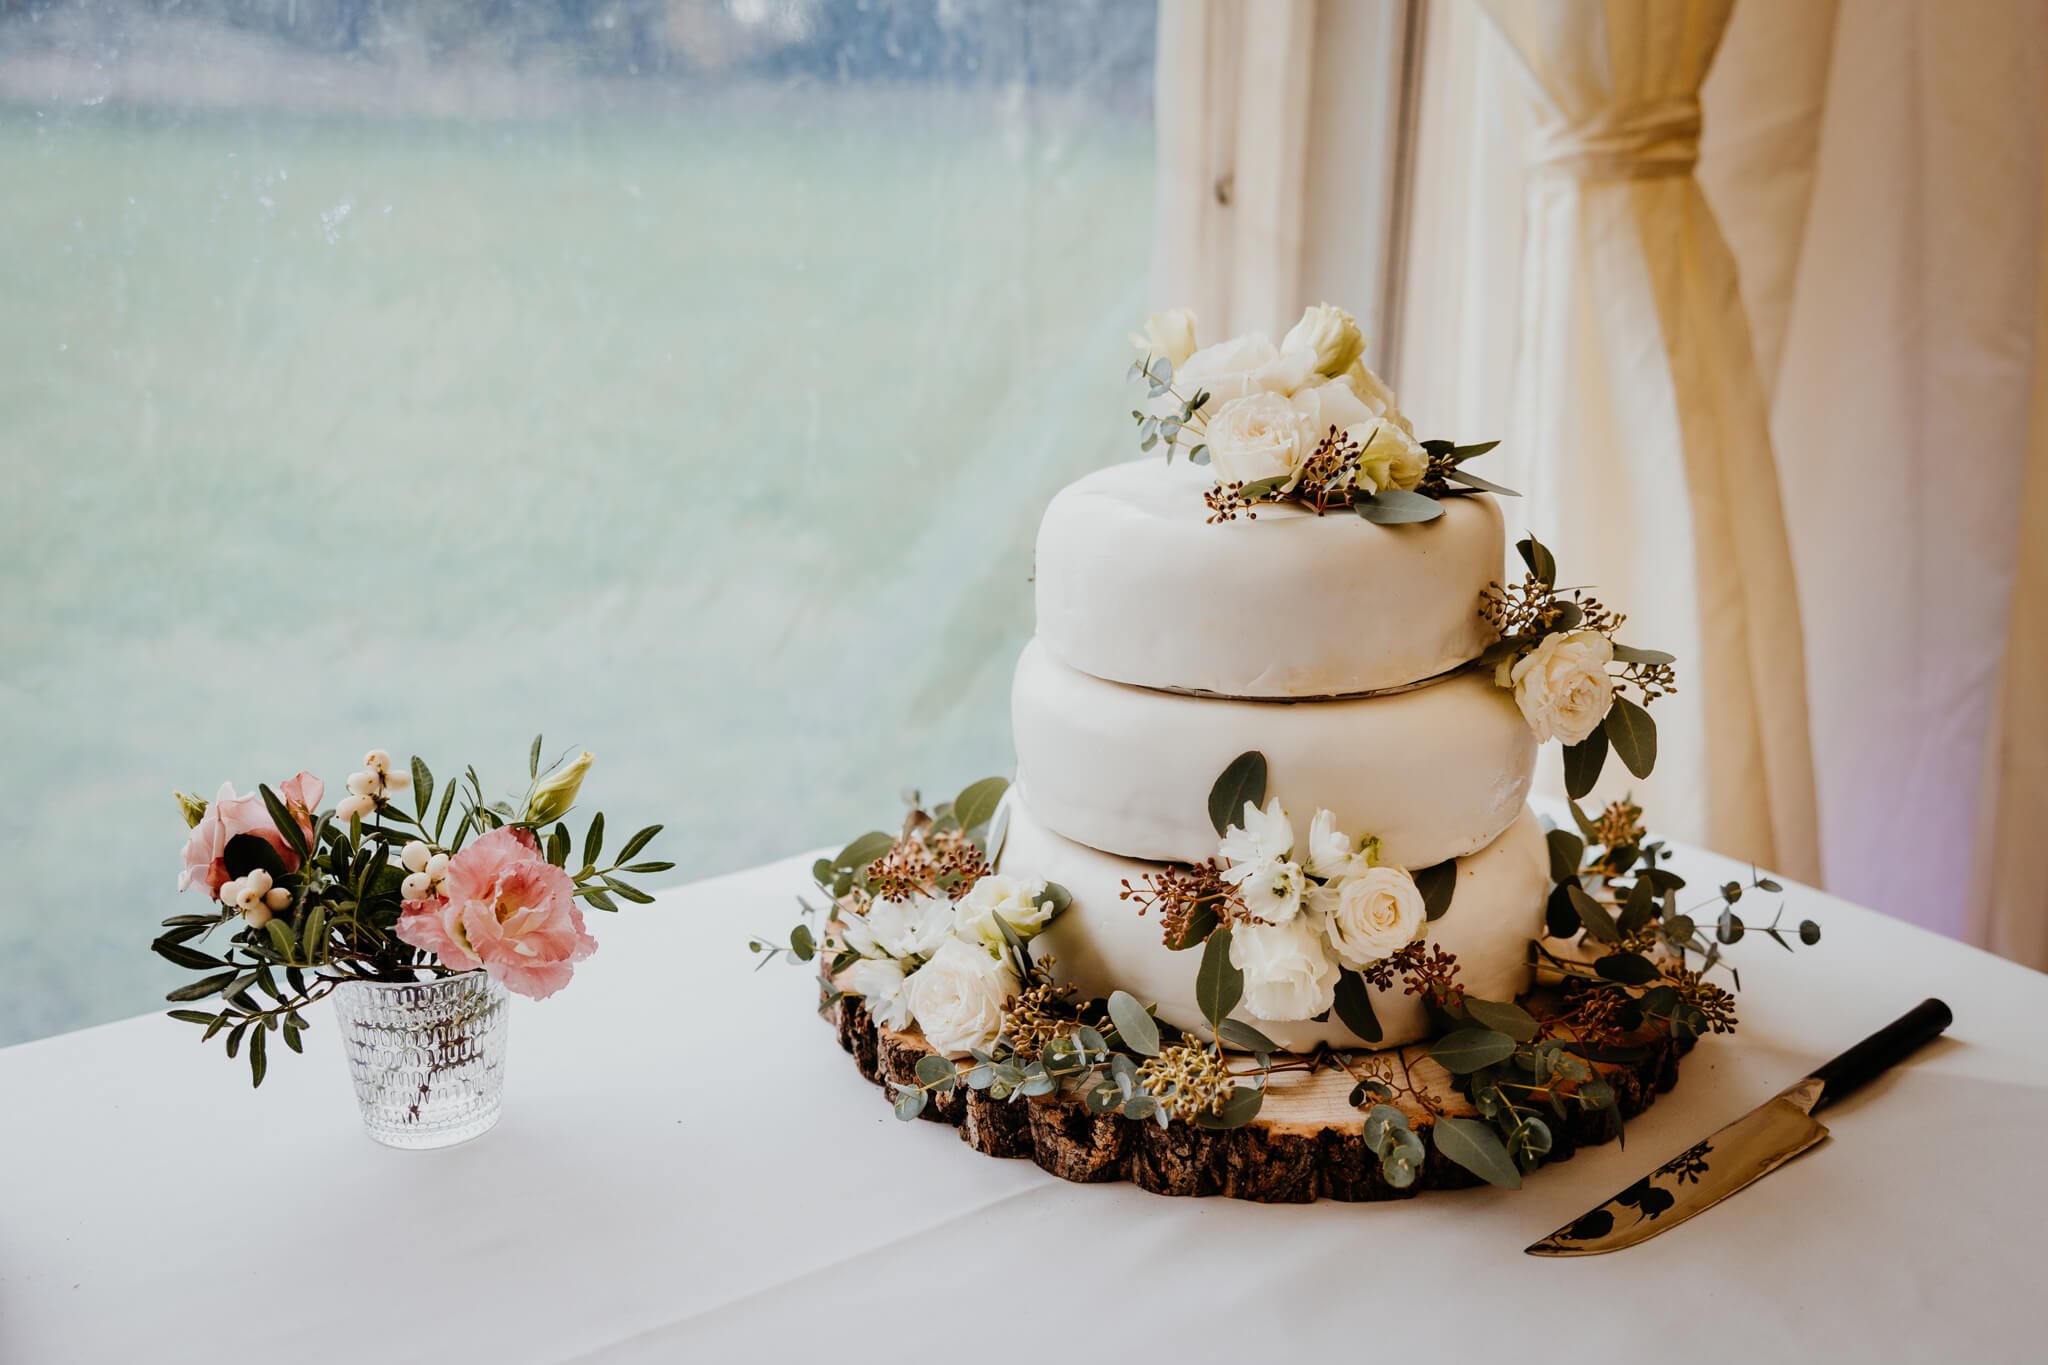 Beth-Shean-Wedding-cake-2.jpg